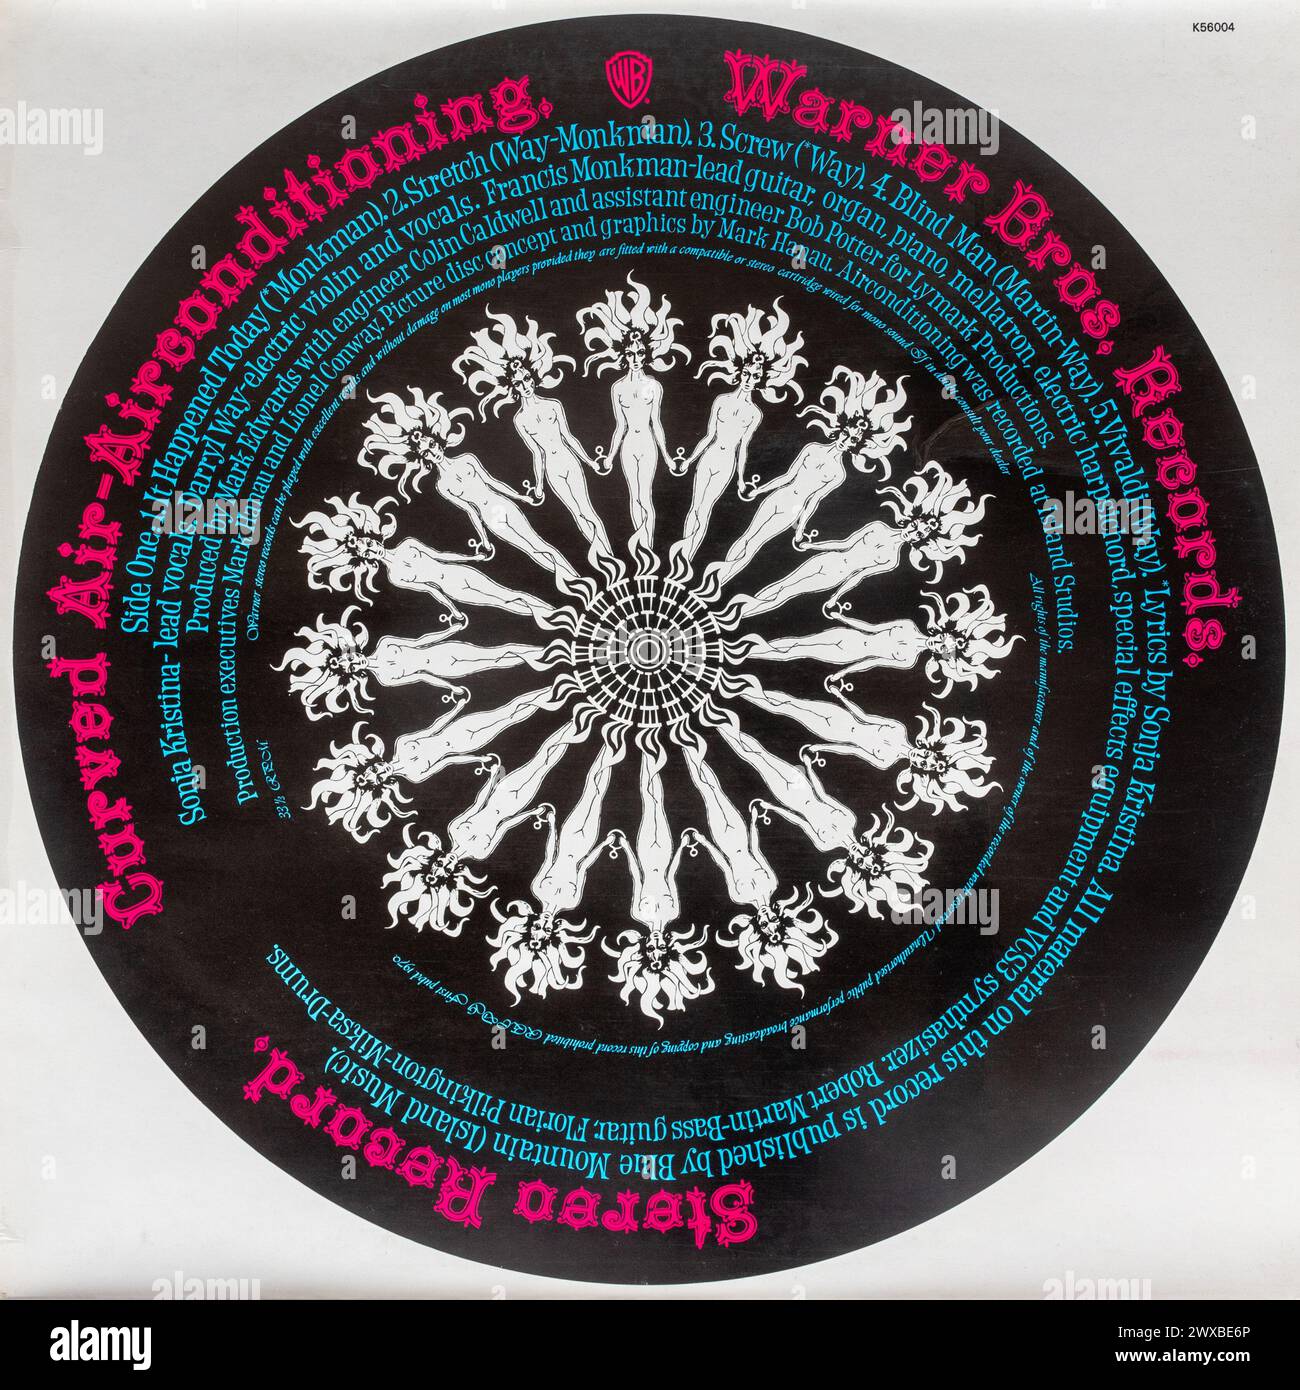 Airconditioning (Air Conditioning) album dei Curved Air, un gruppo progressive rock inglese, copertina album vinile LP Foto Stock